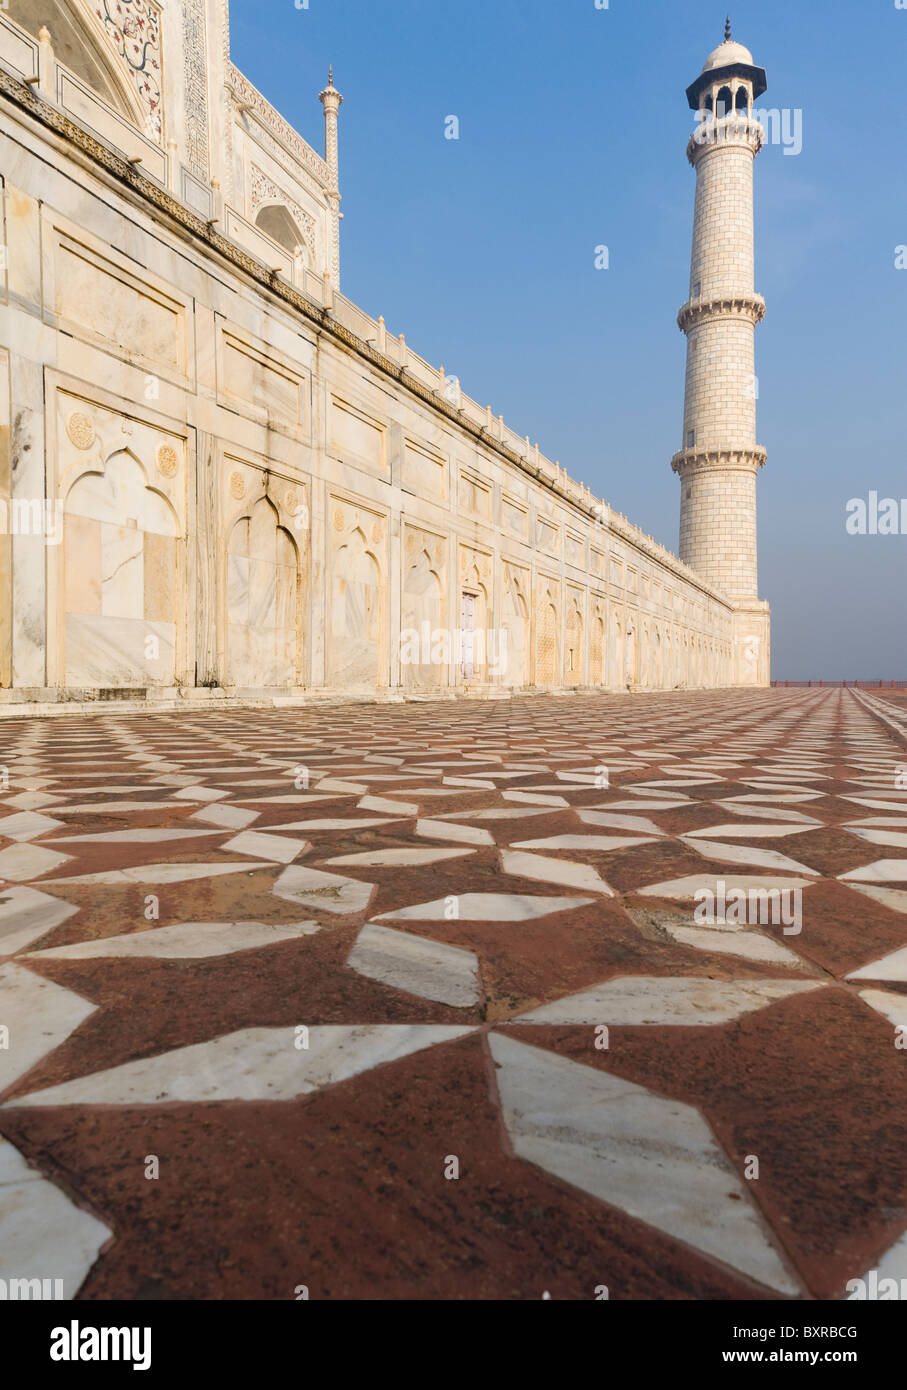 Decorative inlaid stone mosaic surrounding the Taj Mahal in Agra Uttar Pradesh India Stock Photo